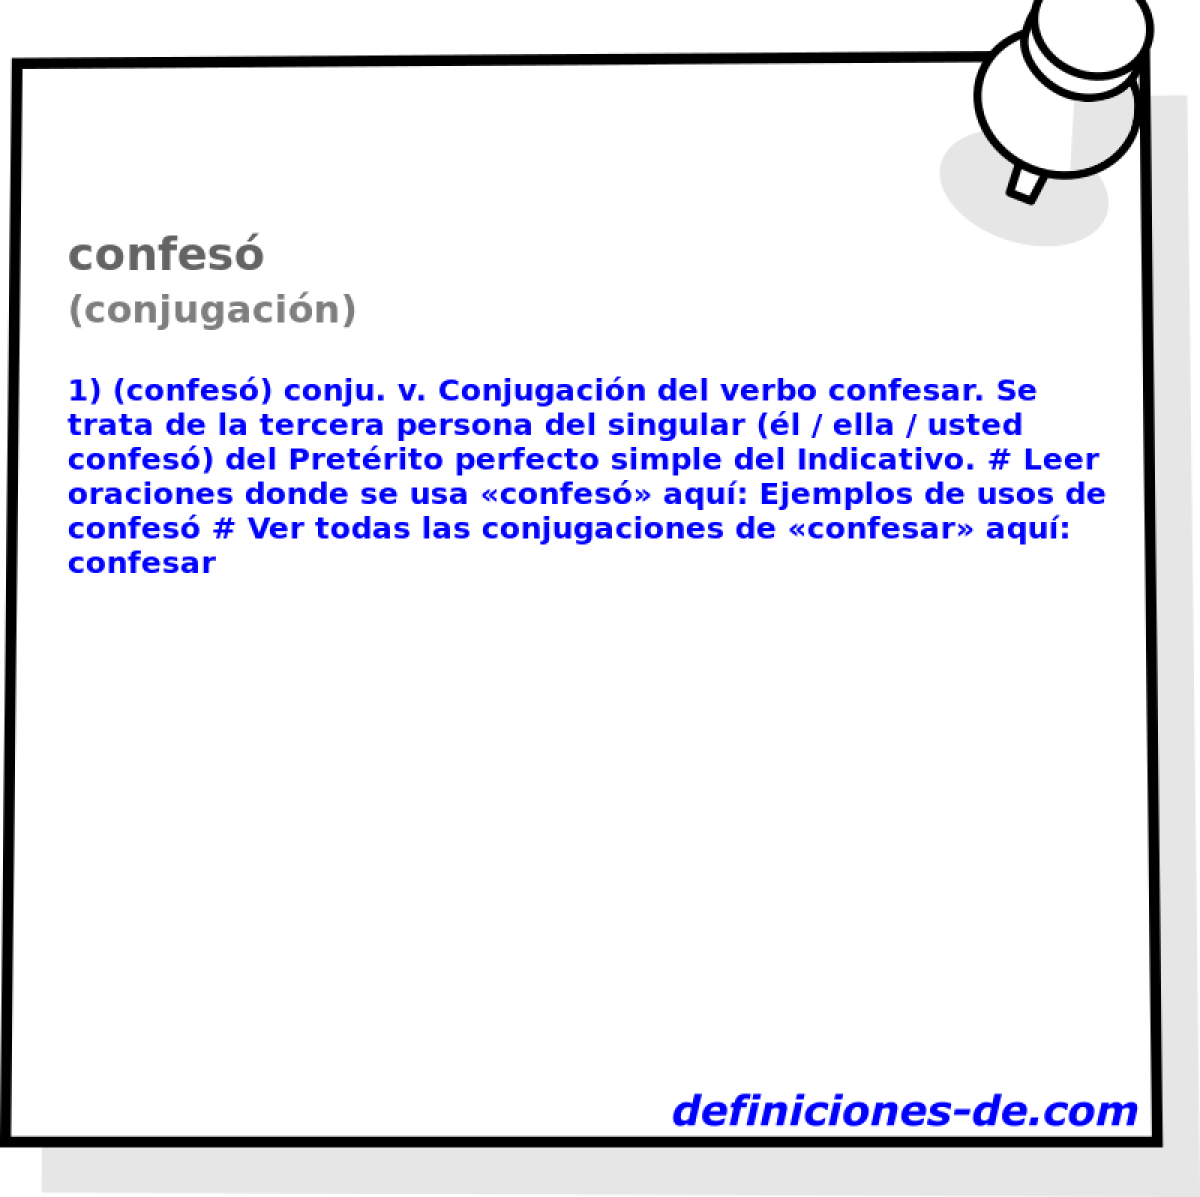 confes (conjugacin)